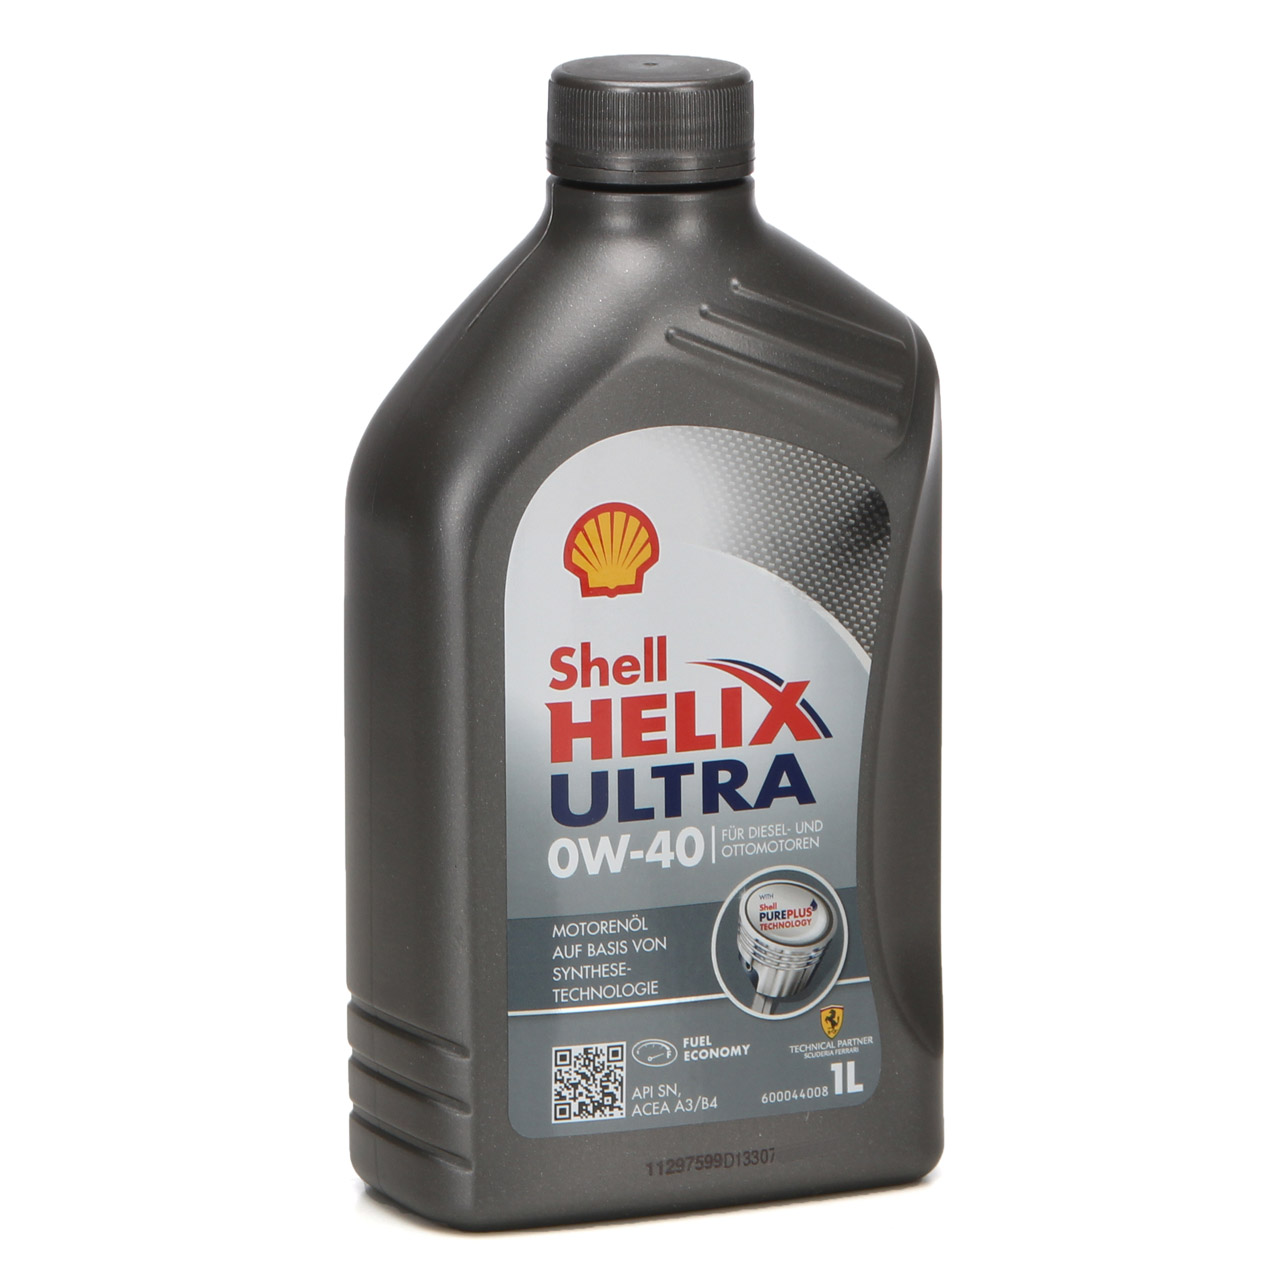 5x 1 Liter SHELL HELIX ULTRA 0W-40 Motoröl Öl MB 229.5/226.5 VW 502.00/505.00